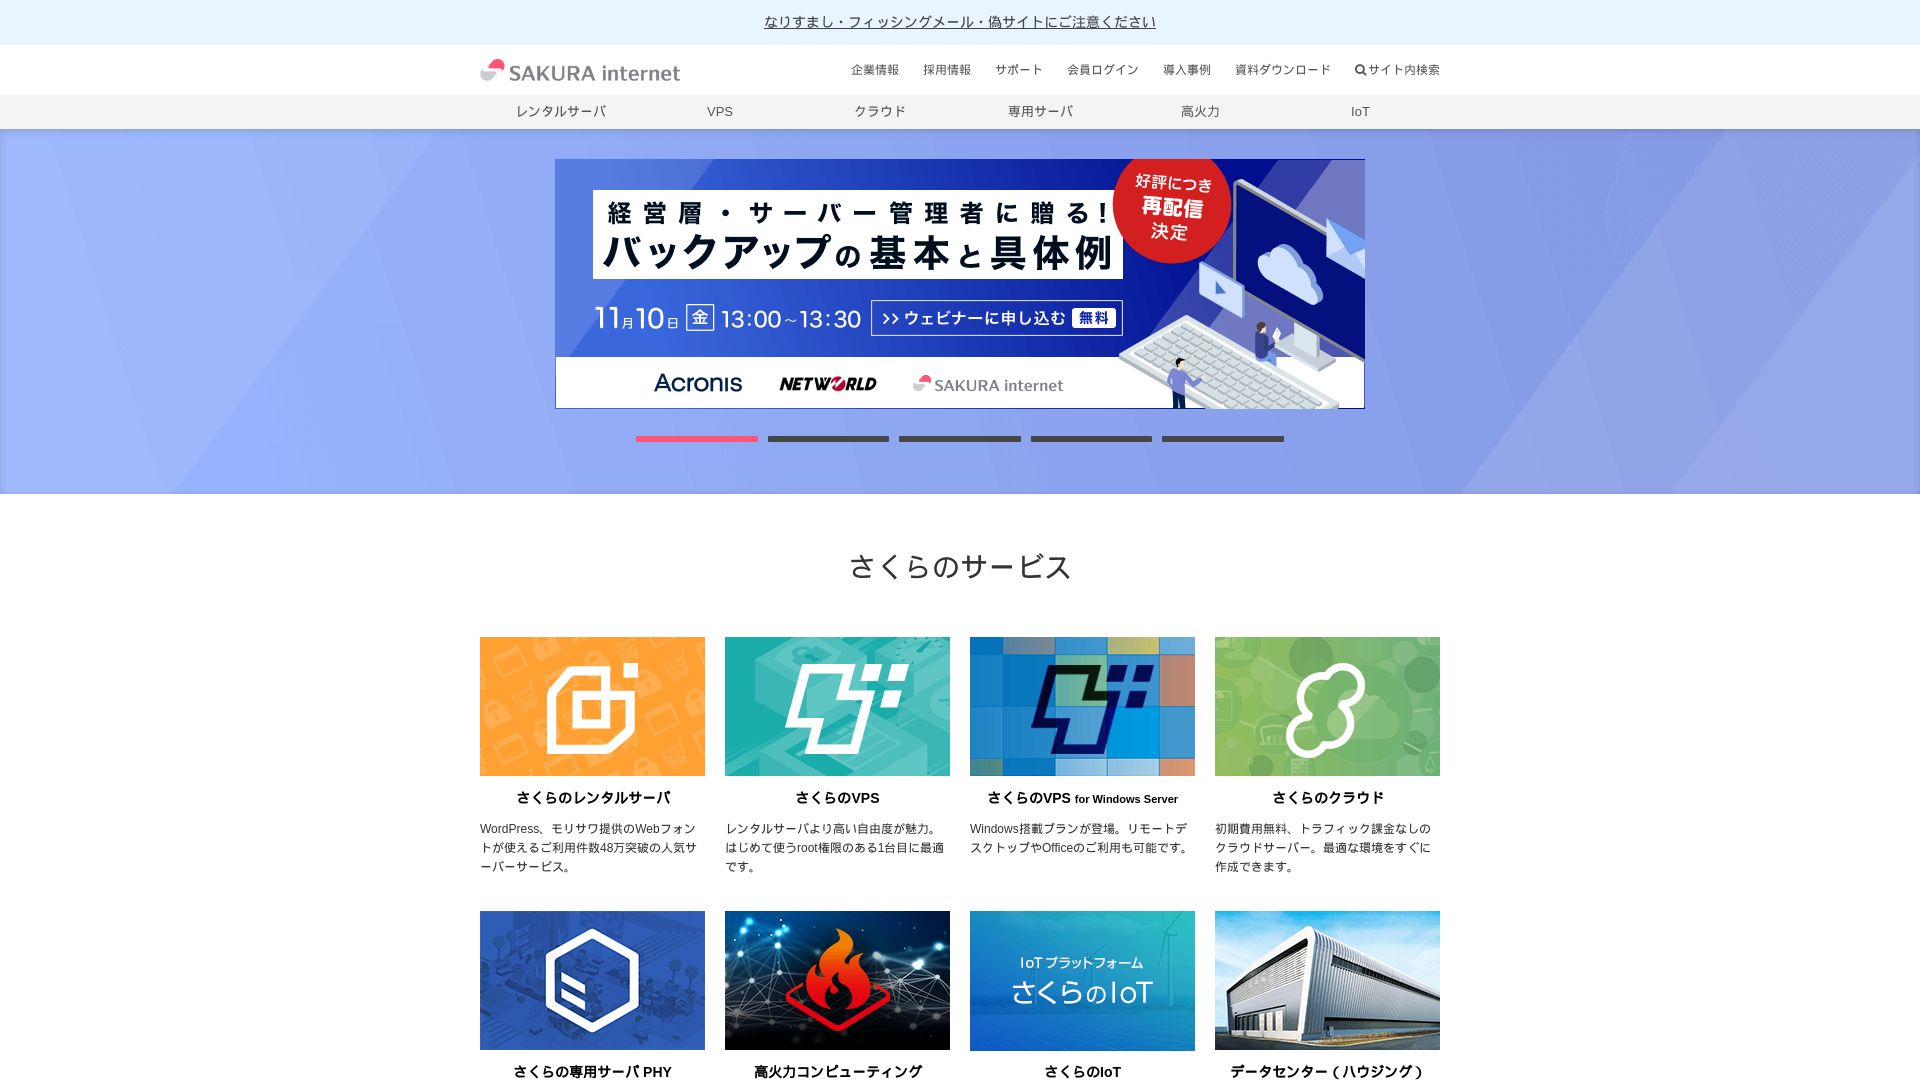 Status do site sakura.ad.jp está   ONLINE